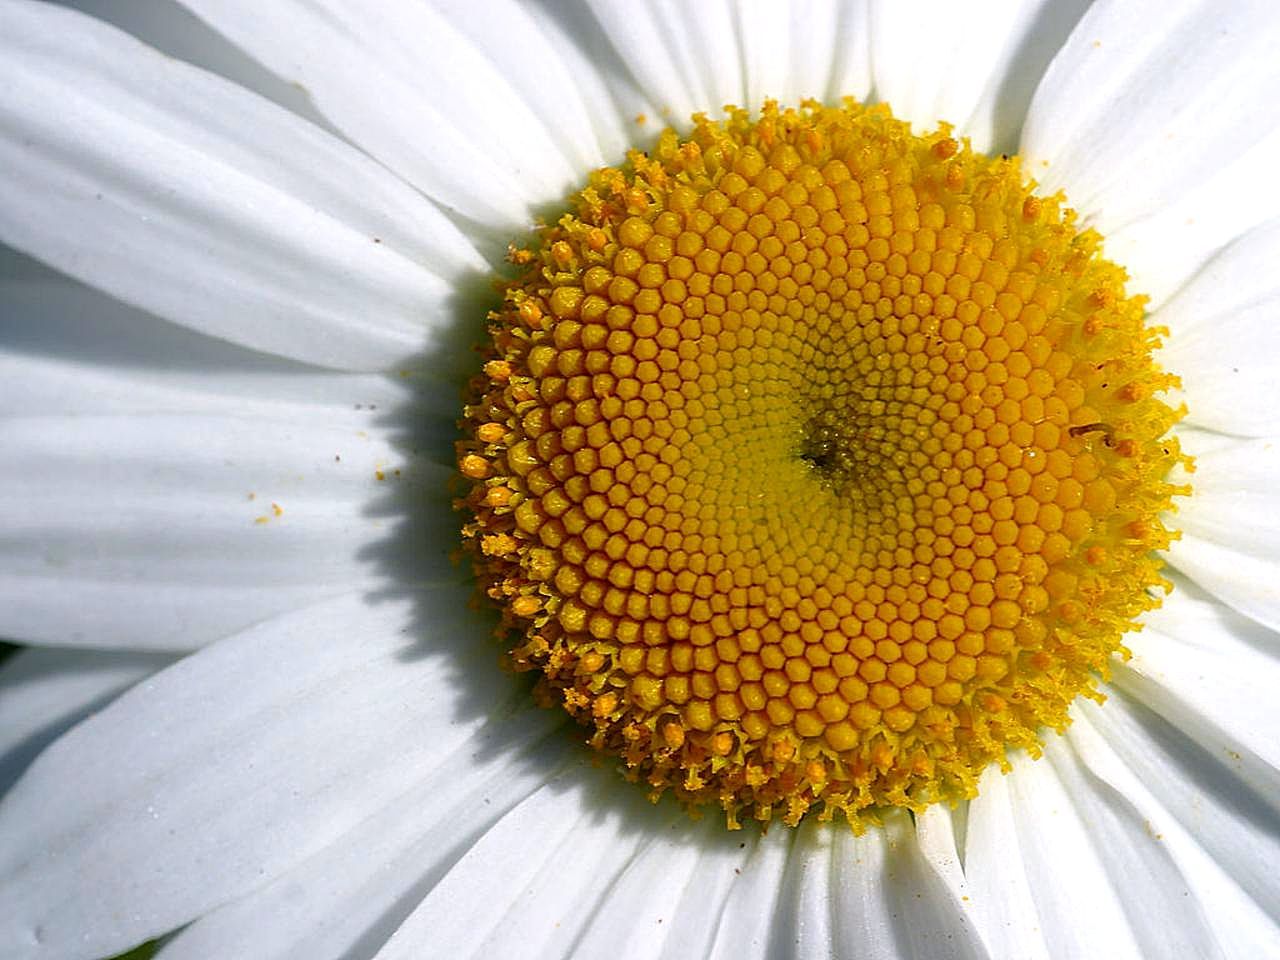 File:Closeup of a daisy flower.jpg